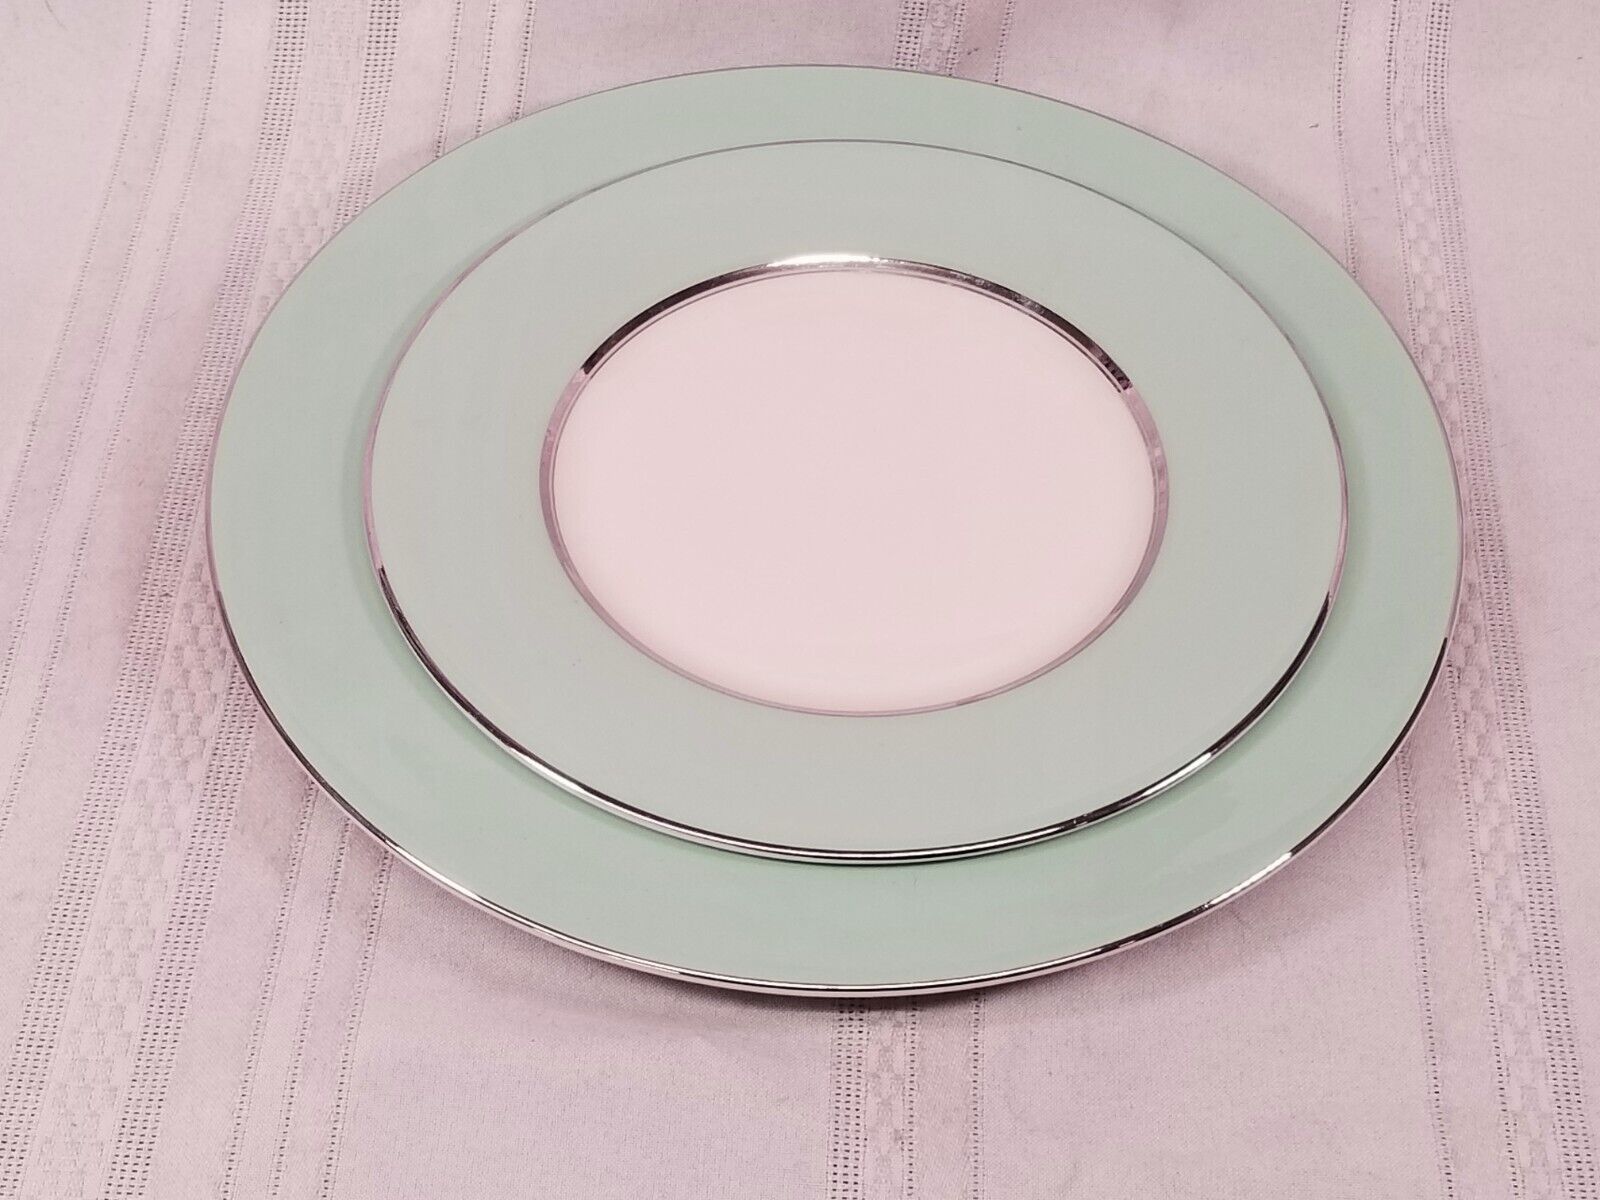 Castleton (USA) Castleton Turquoise Dinner Plate salad plate